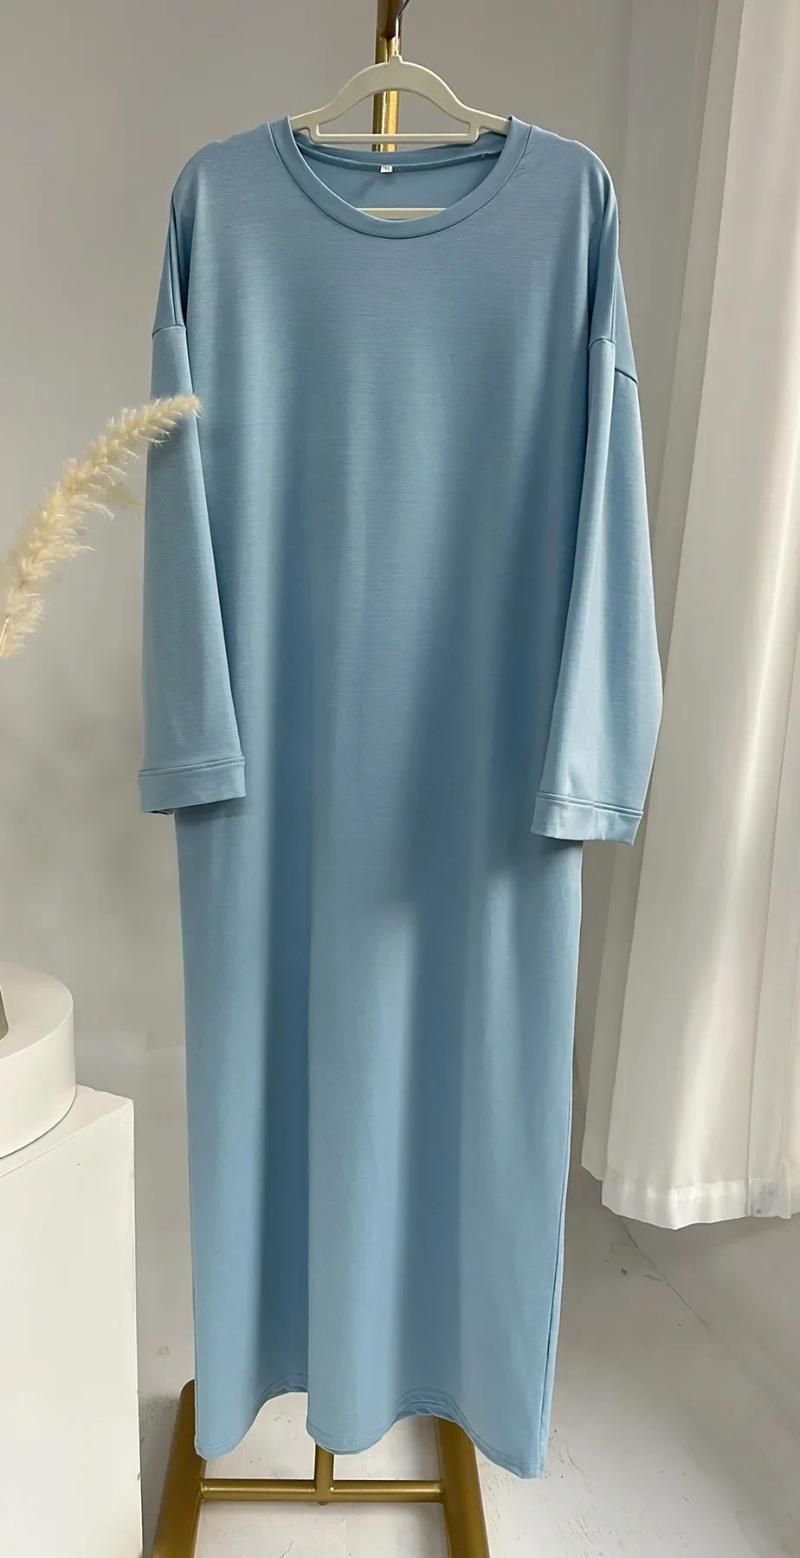 XS-S light blue dress